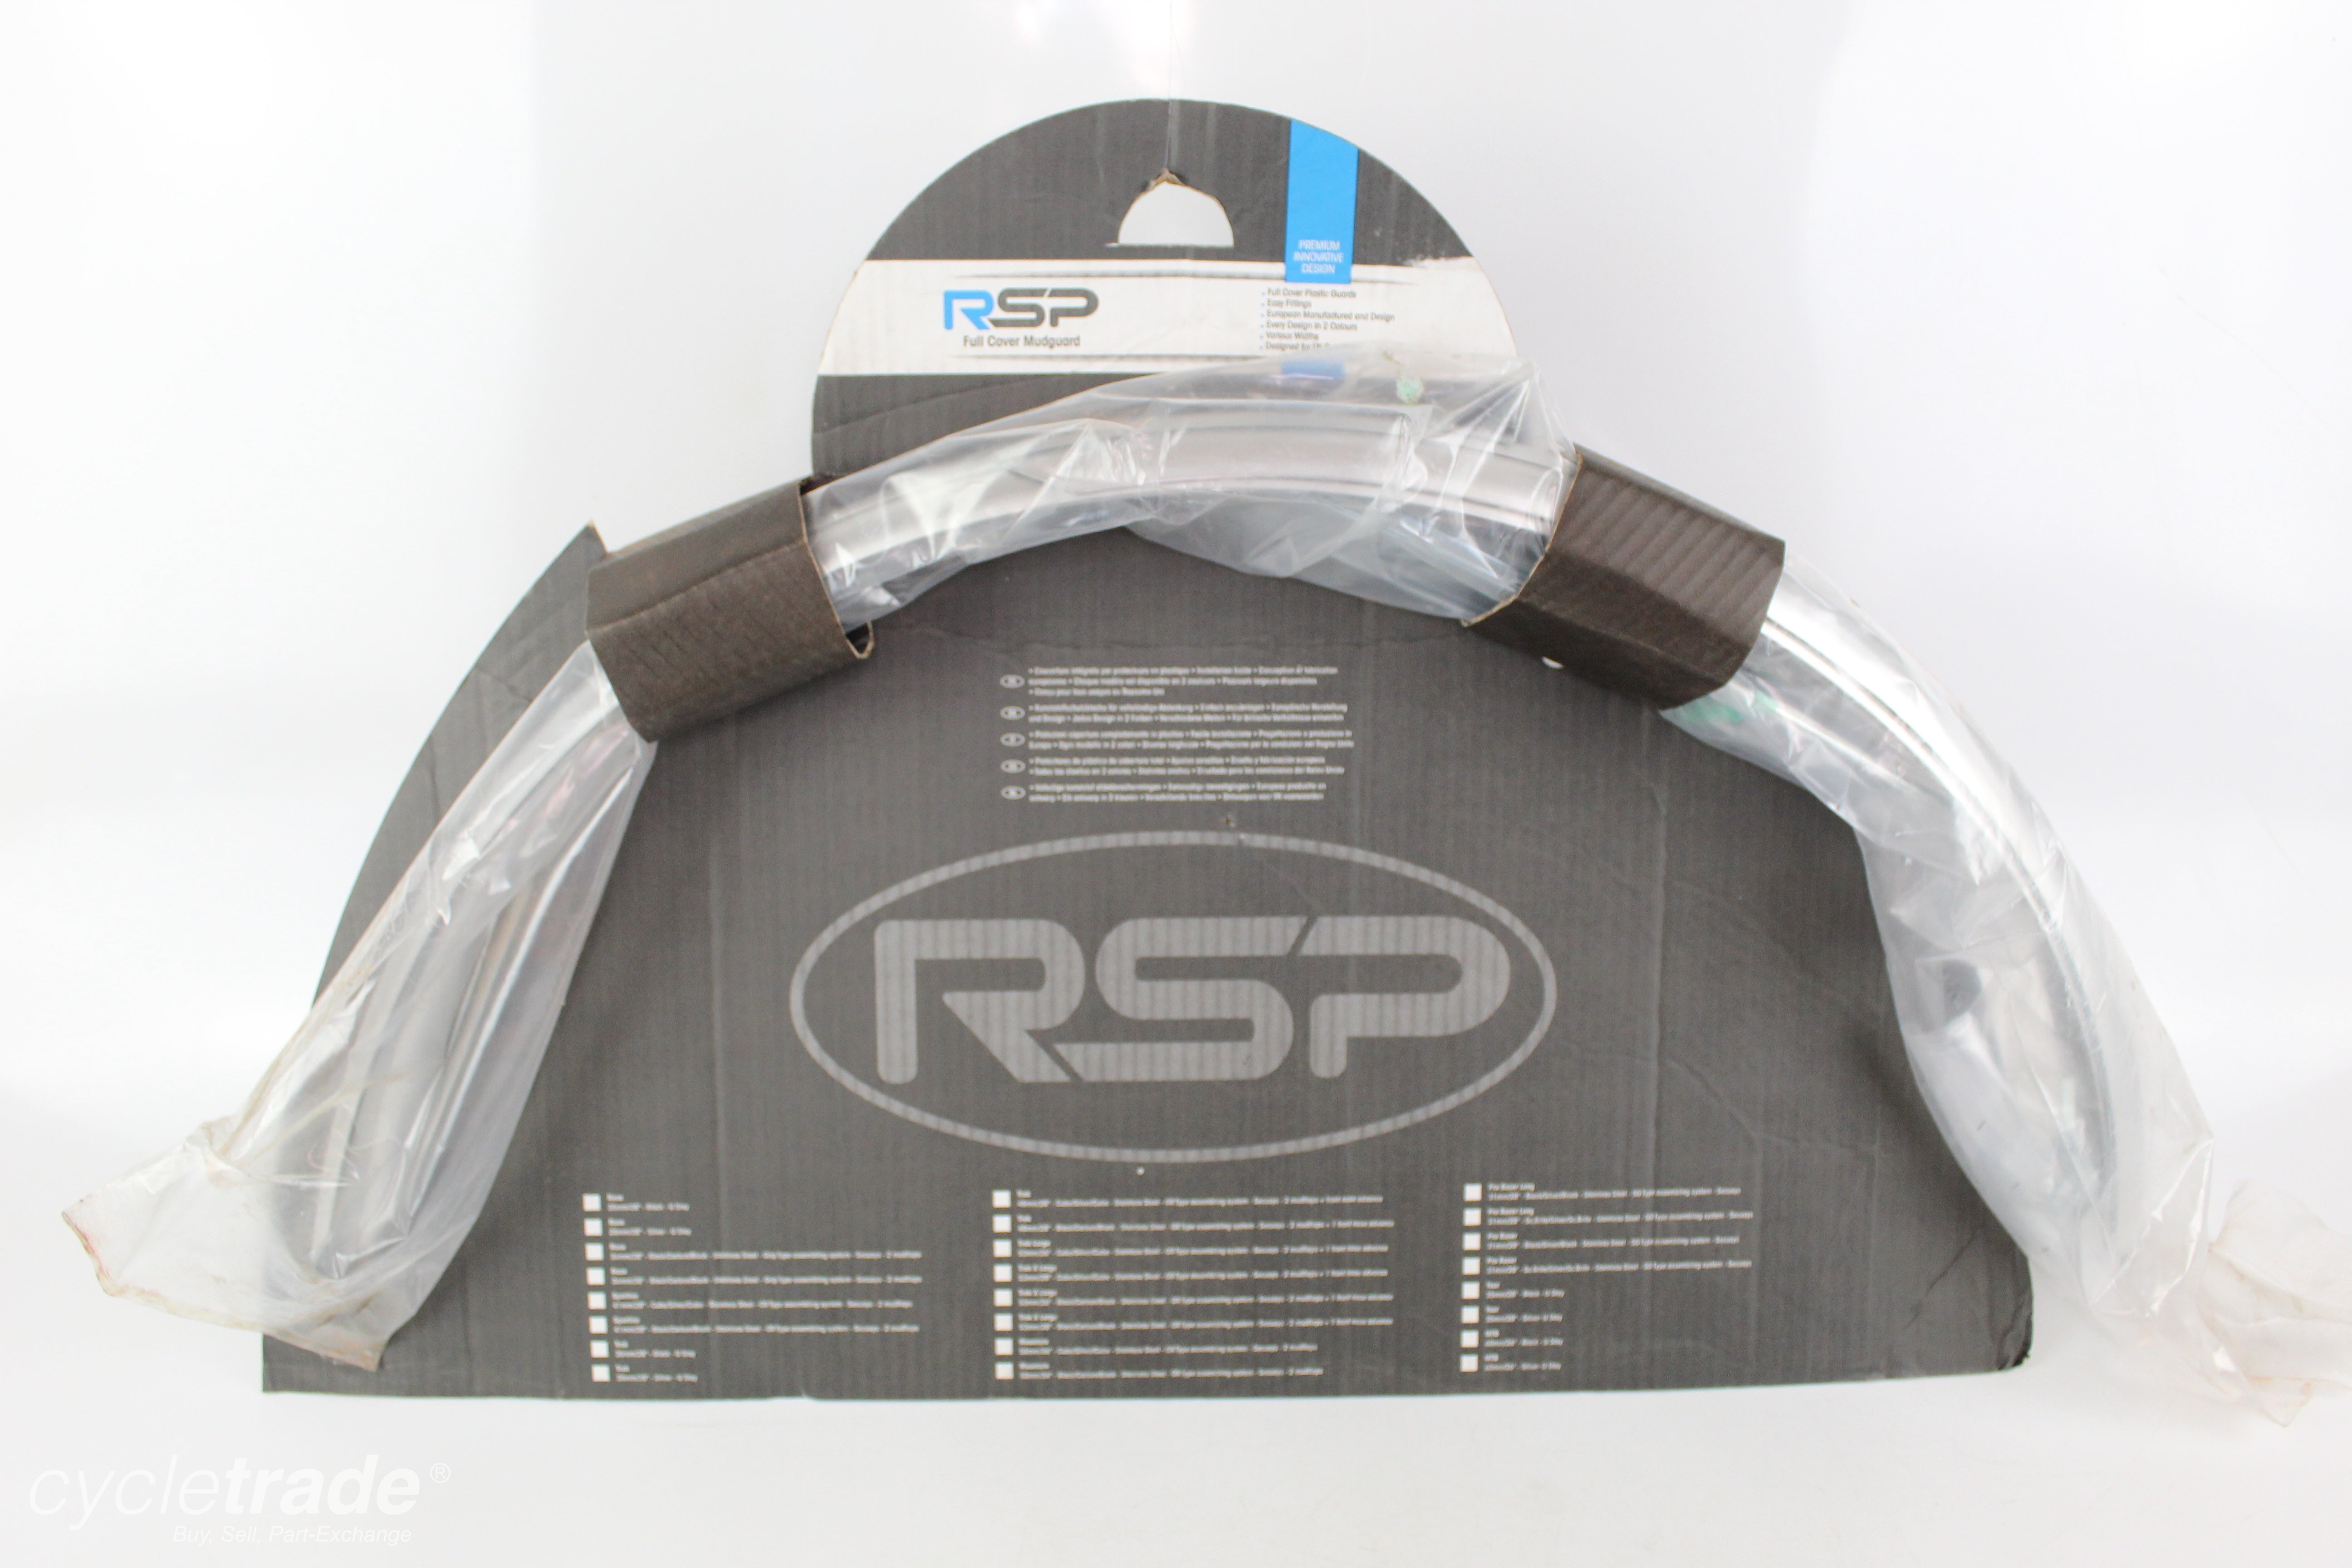 Accessories - RSP Full Cover Mudguard Silver - Grade A+ (New)